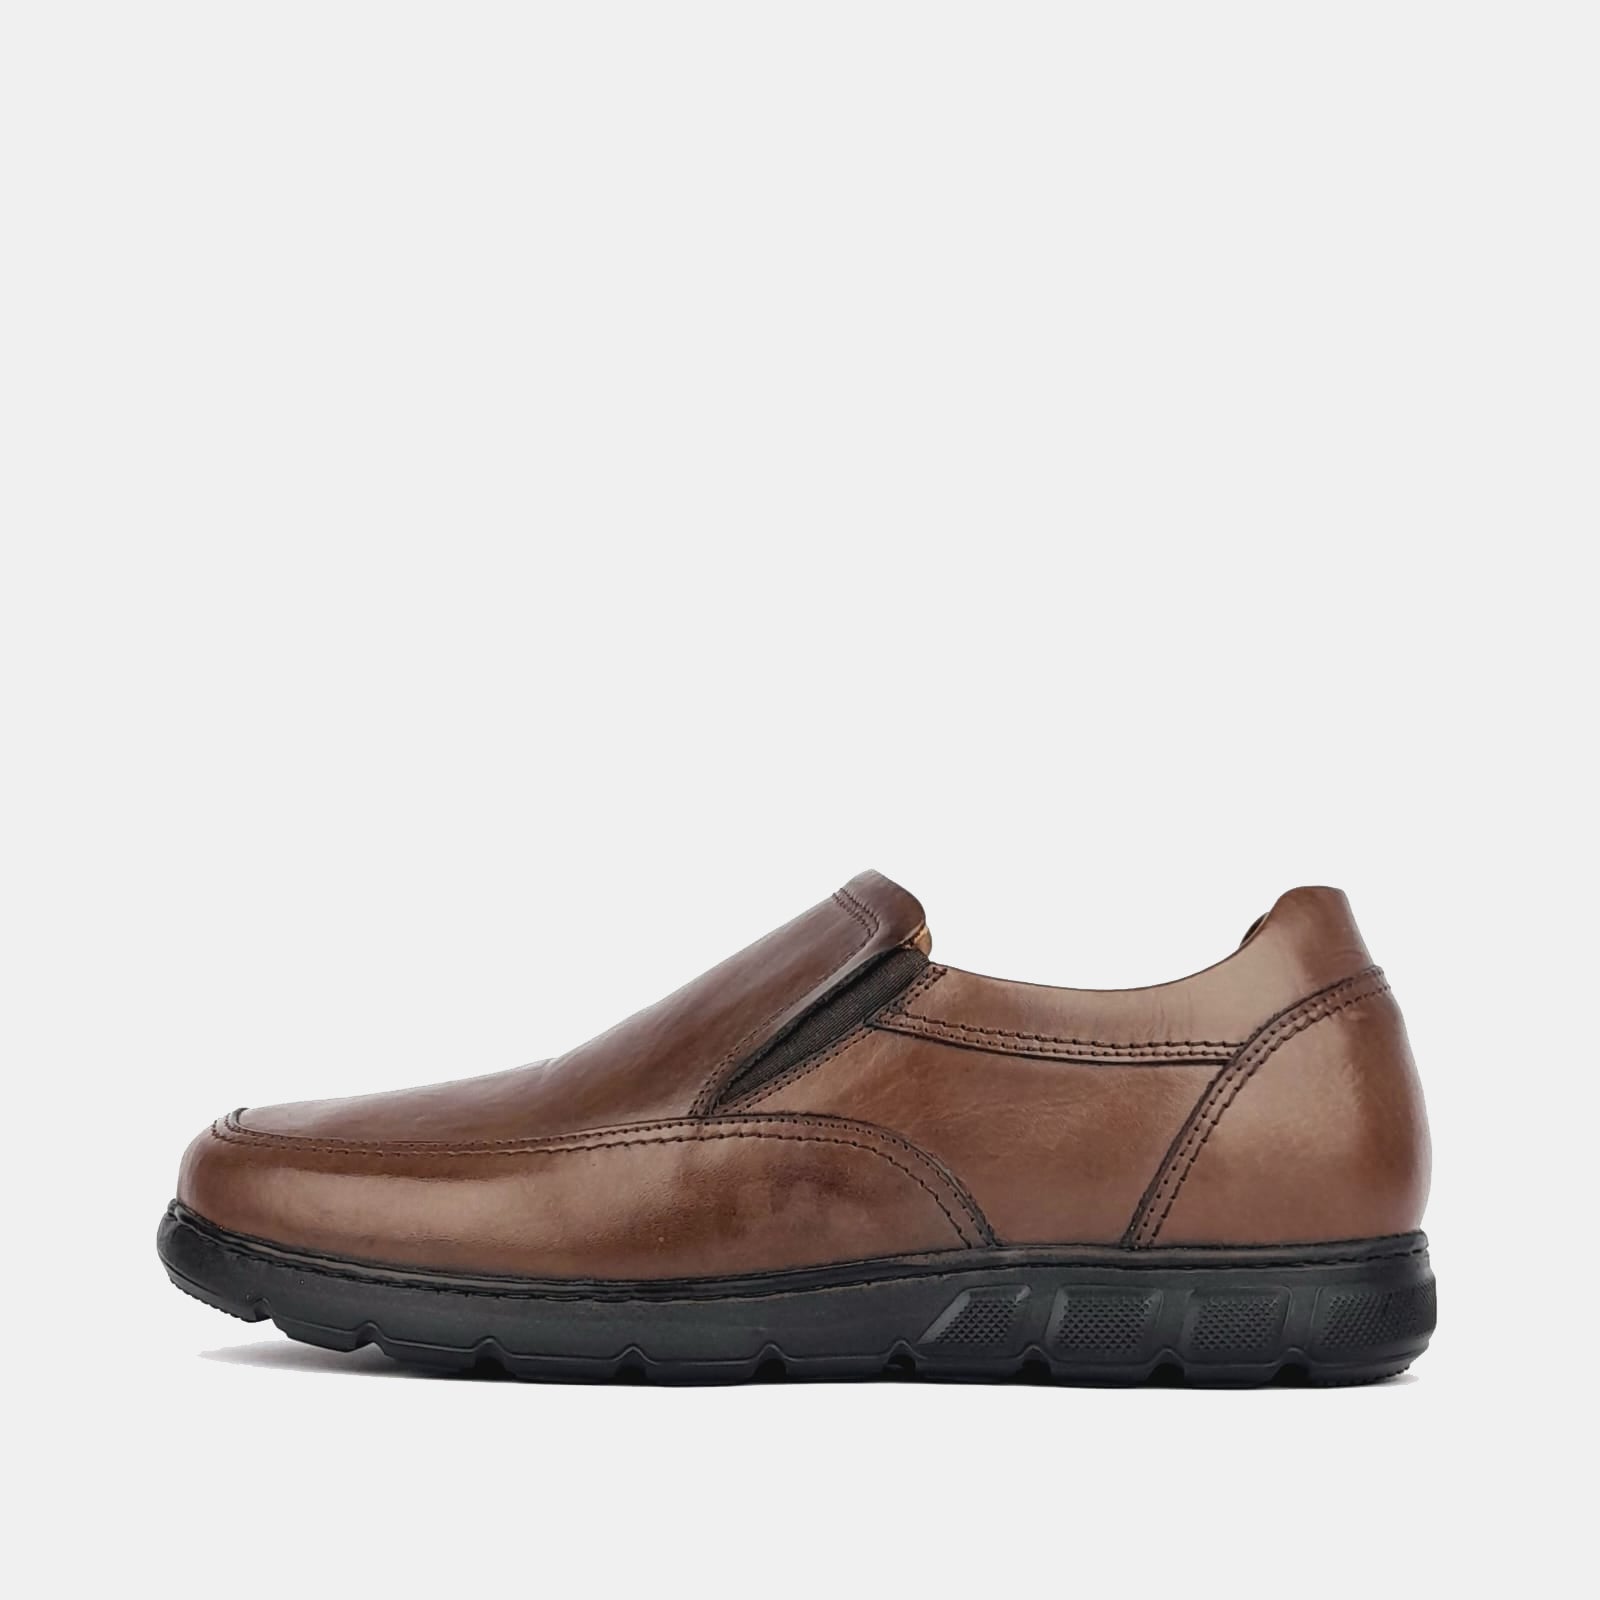 3031 S Chaussure en cuir marron